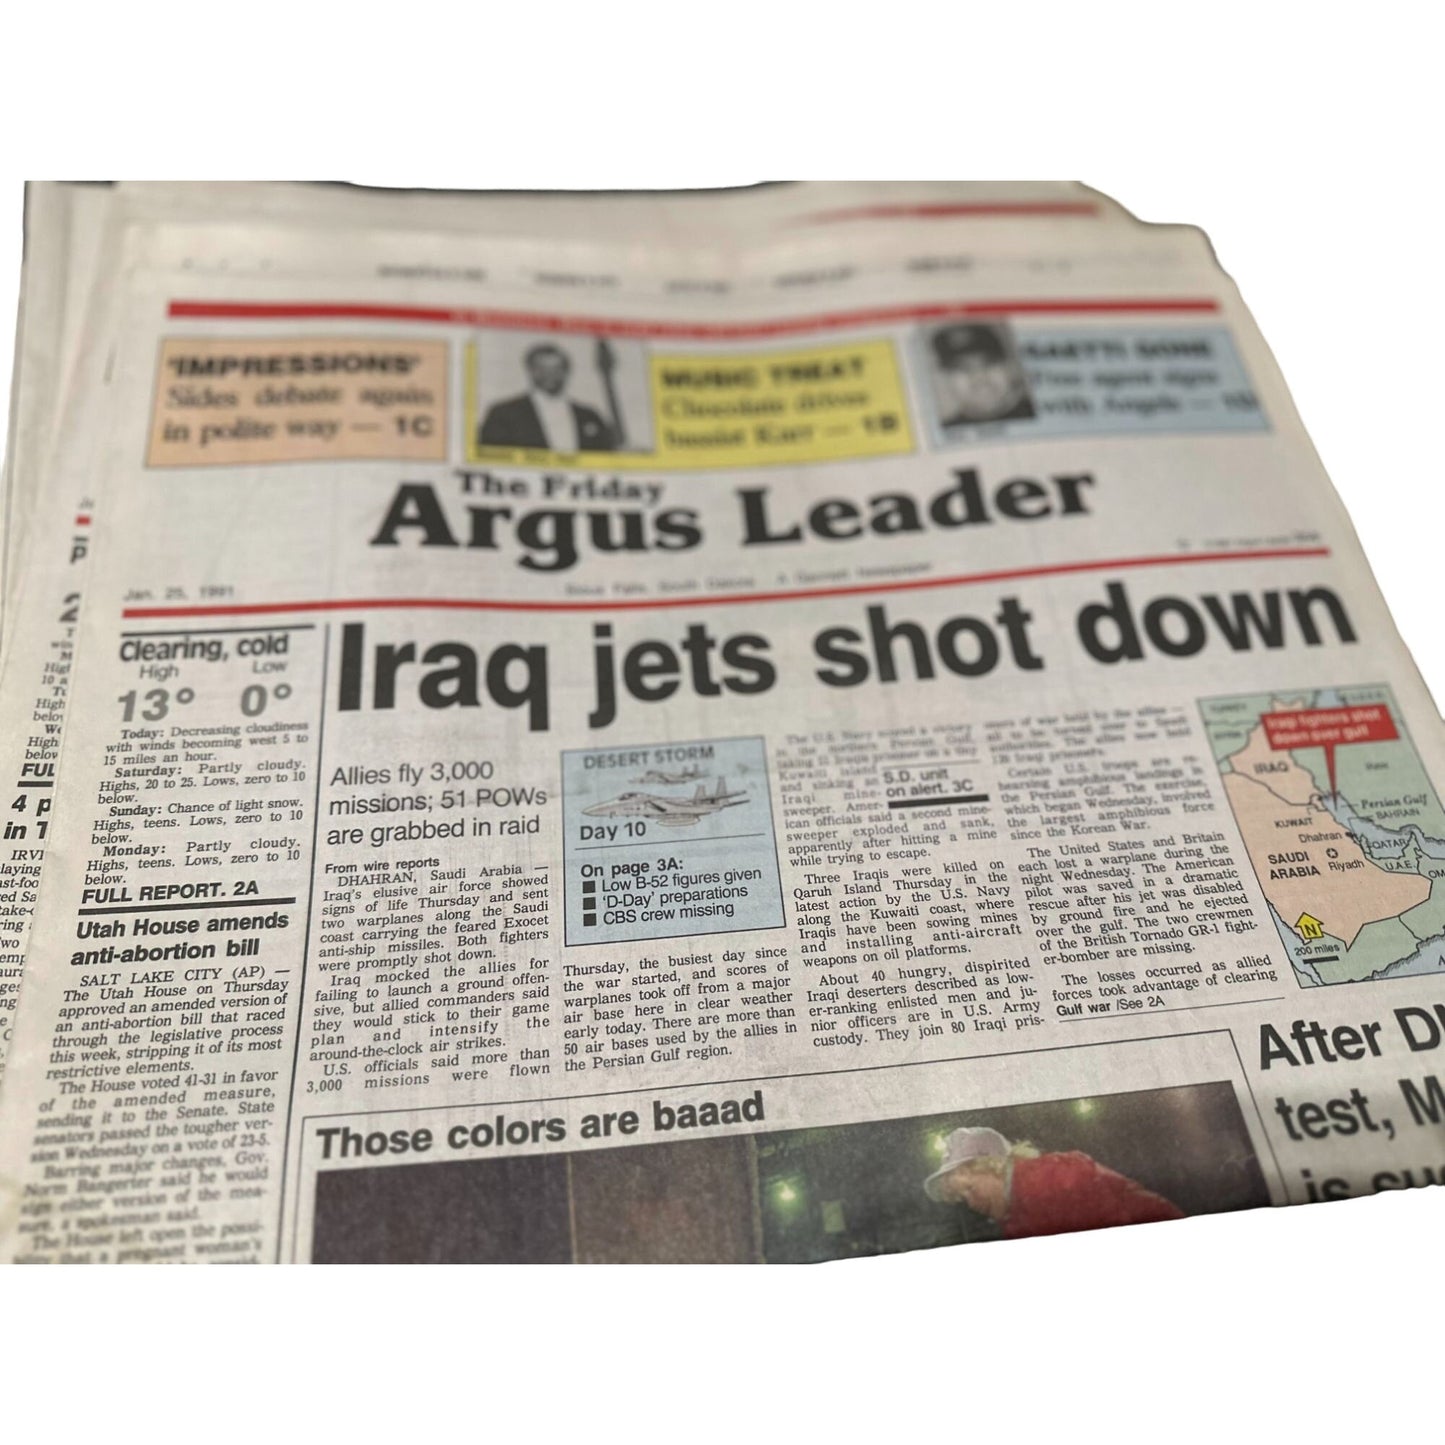 Vintage 1990 Newspaper The Friday Argus Leader Iraq Jets Shot Down